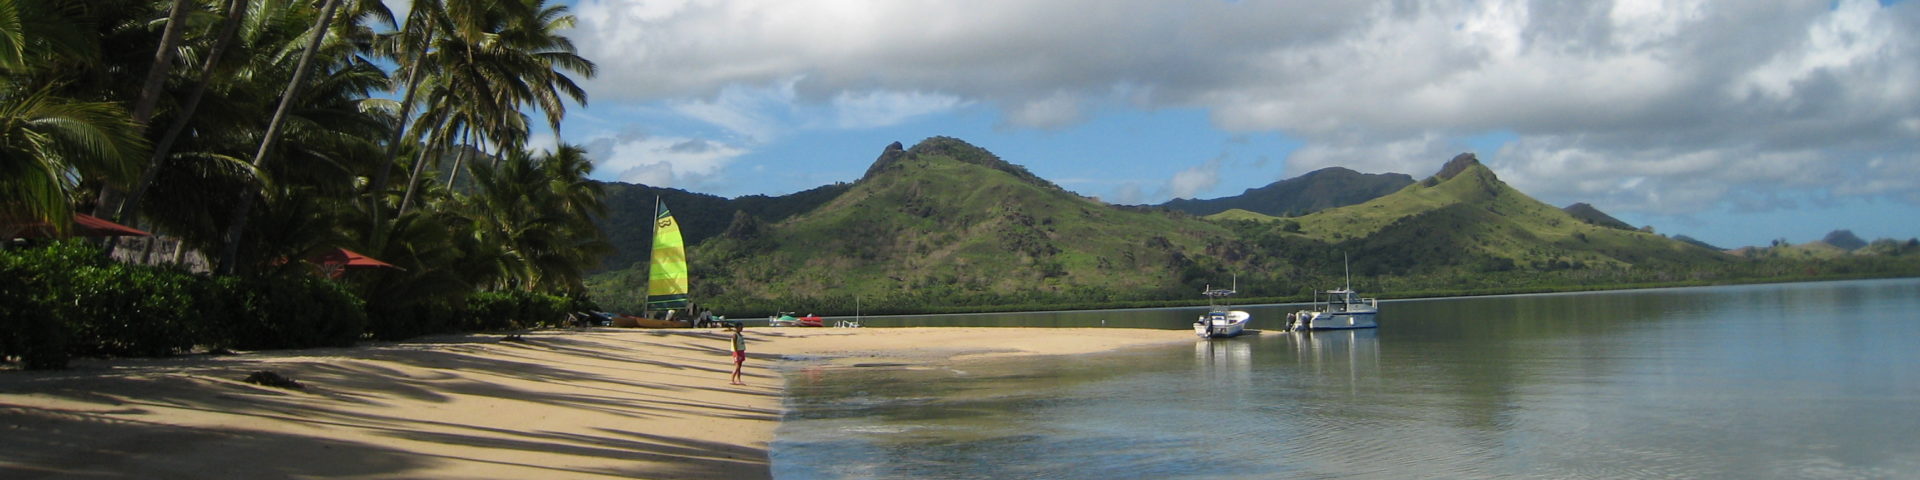 Best Beaches in Fiji - Coffee Meets Beach